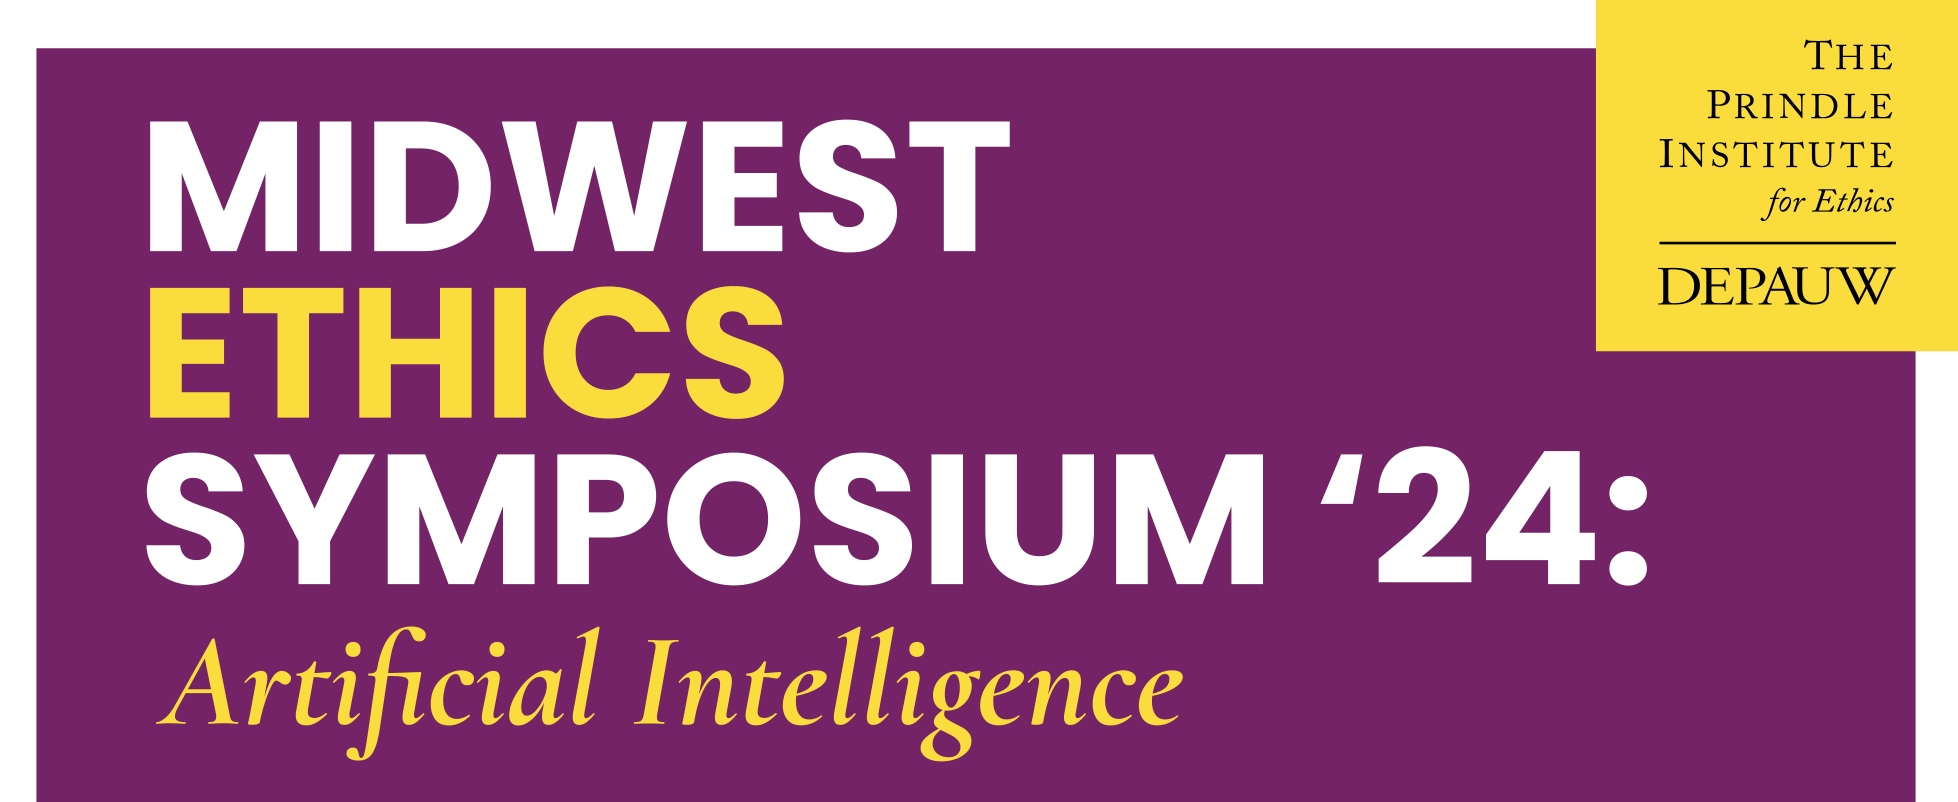 Midwest Ethics Symposium